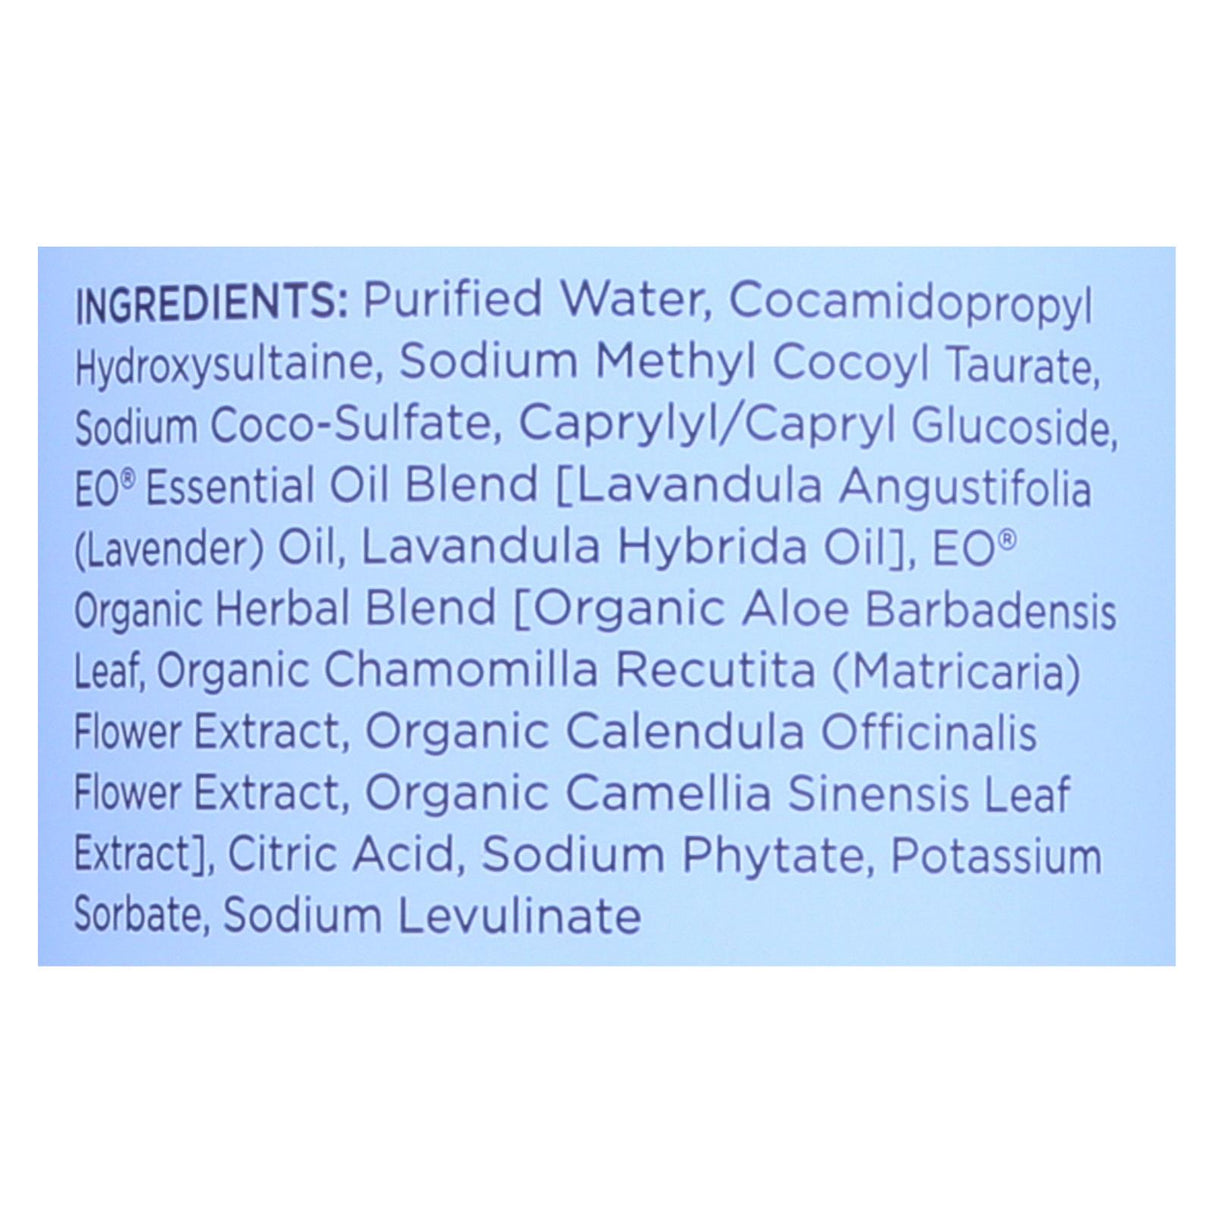 Eo Products -  Liquid Hand Soap Refill - French Lavender (32 Fl Oz) - Cozy Farm 